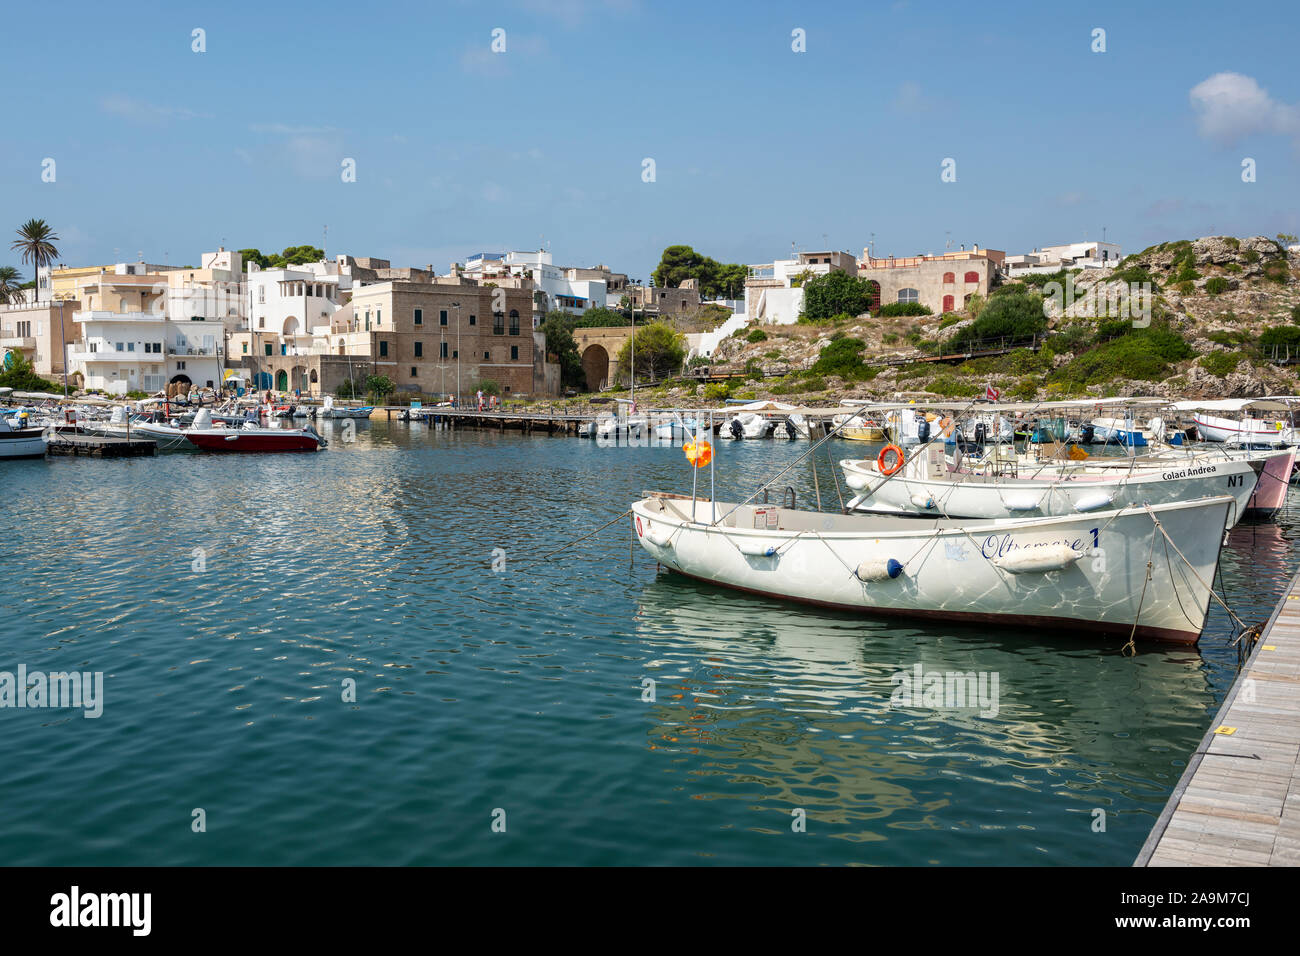 Boats moored in the marina at Santa Maria di Leuca in Apulia (Puglia) in Southern Italy Stock Photo